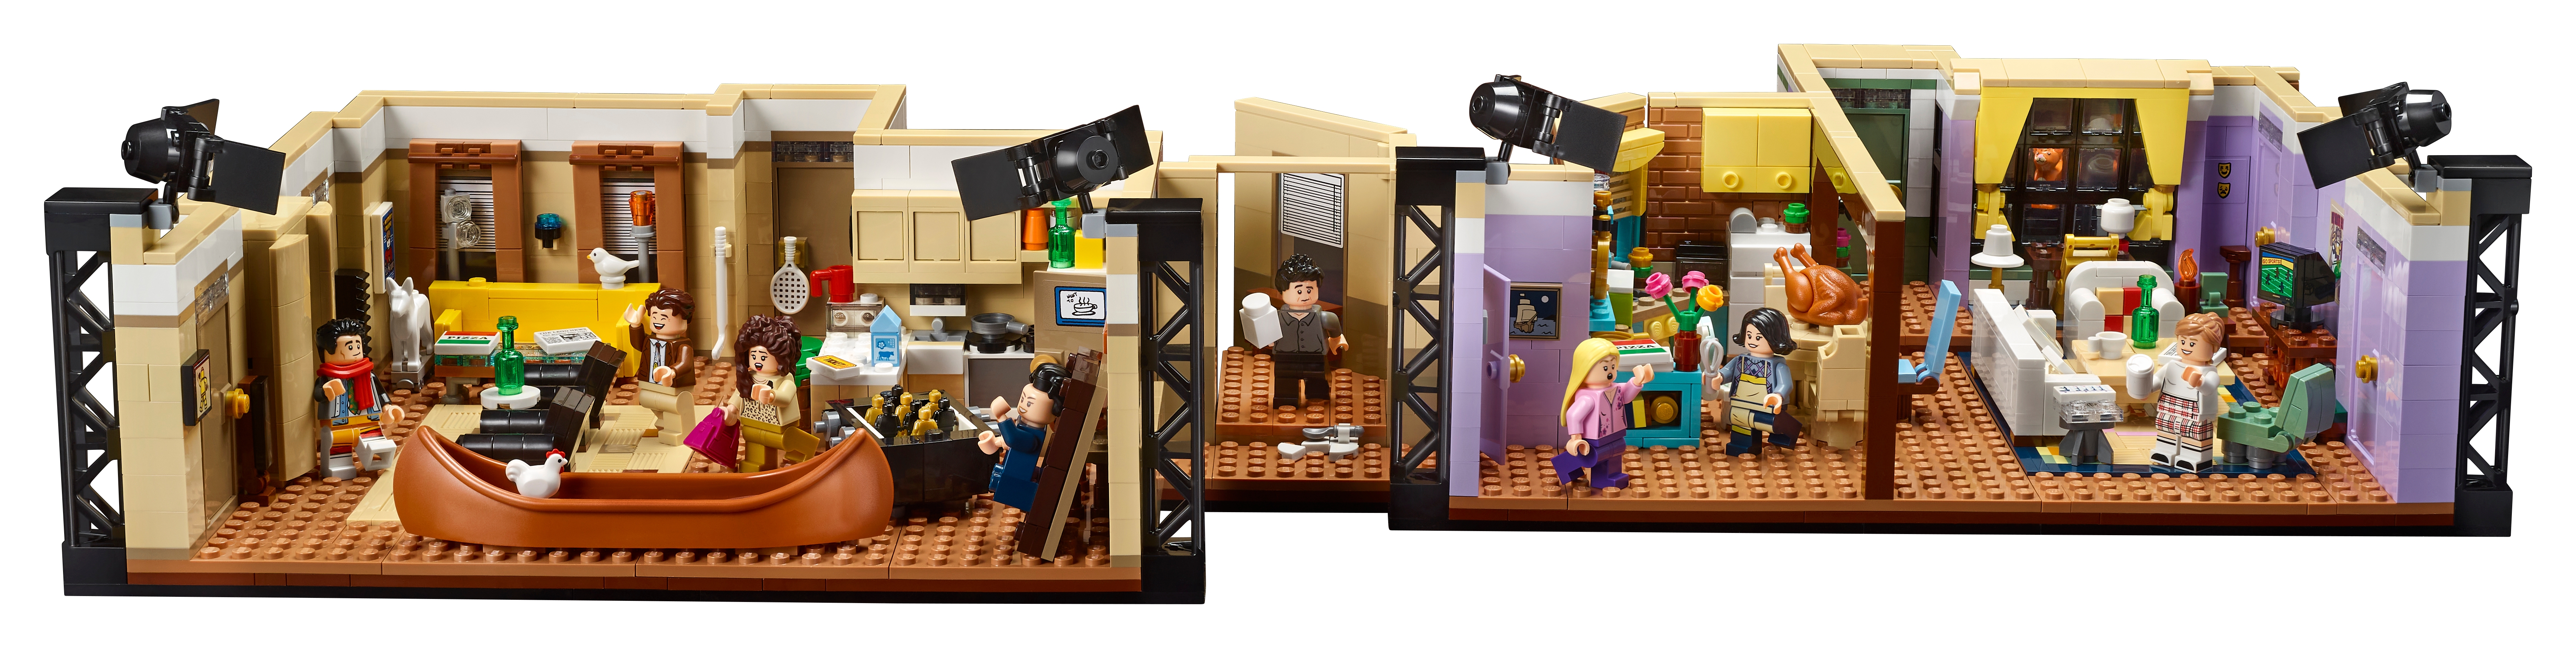 Apartments About Us - LEGO.com